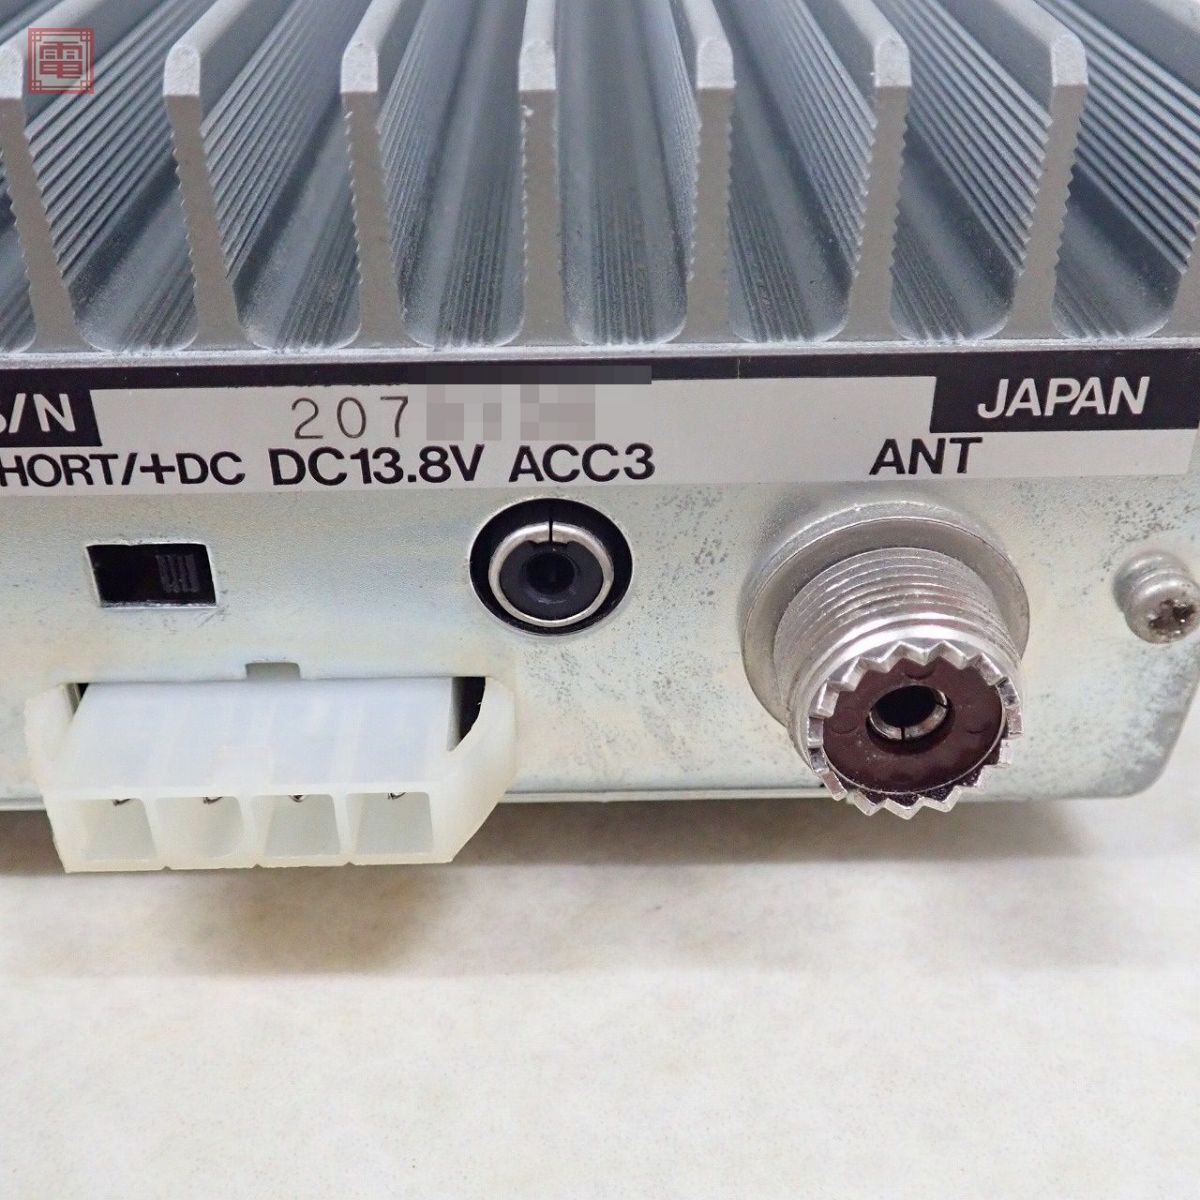  Tokyo high power HL-150B linear amplifier 3.5~29.7MHz 100W manual * original box attaching [20